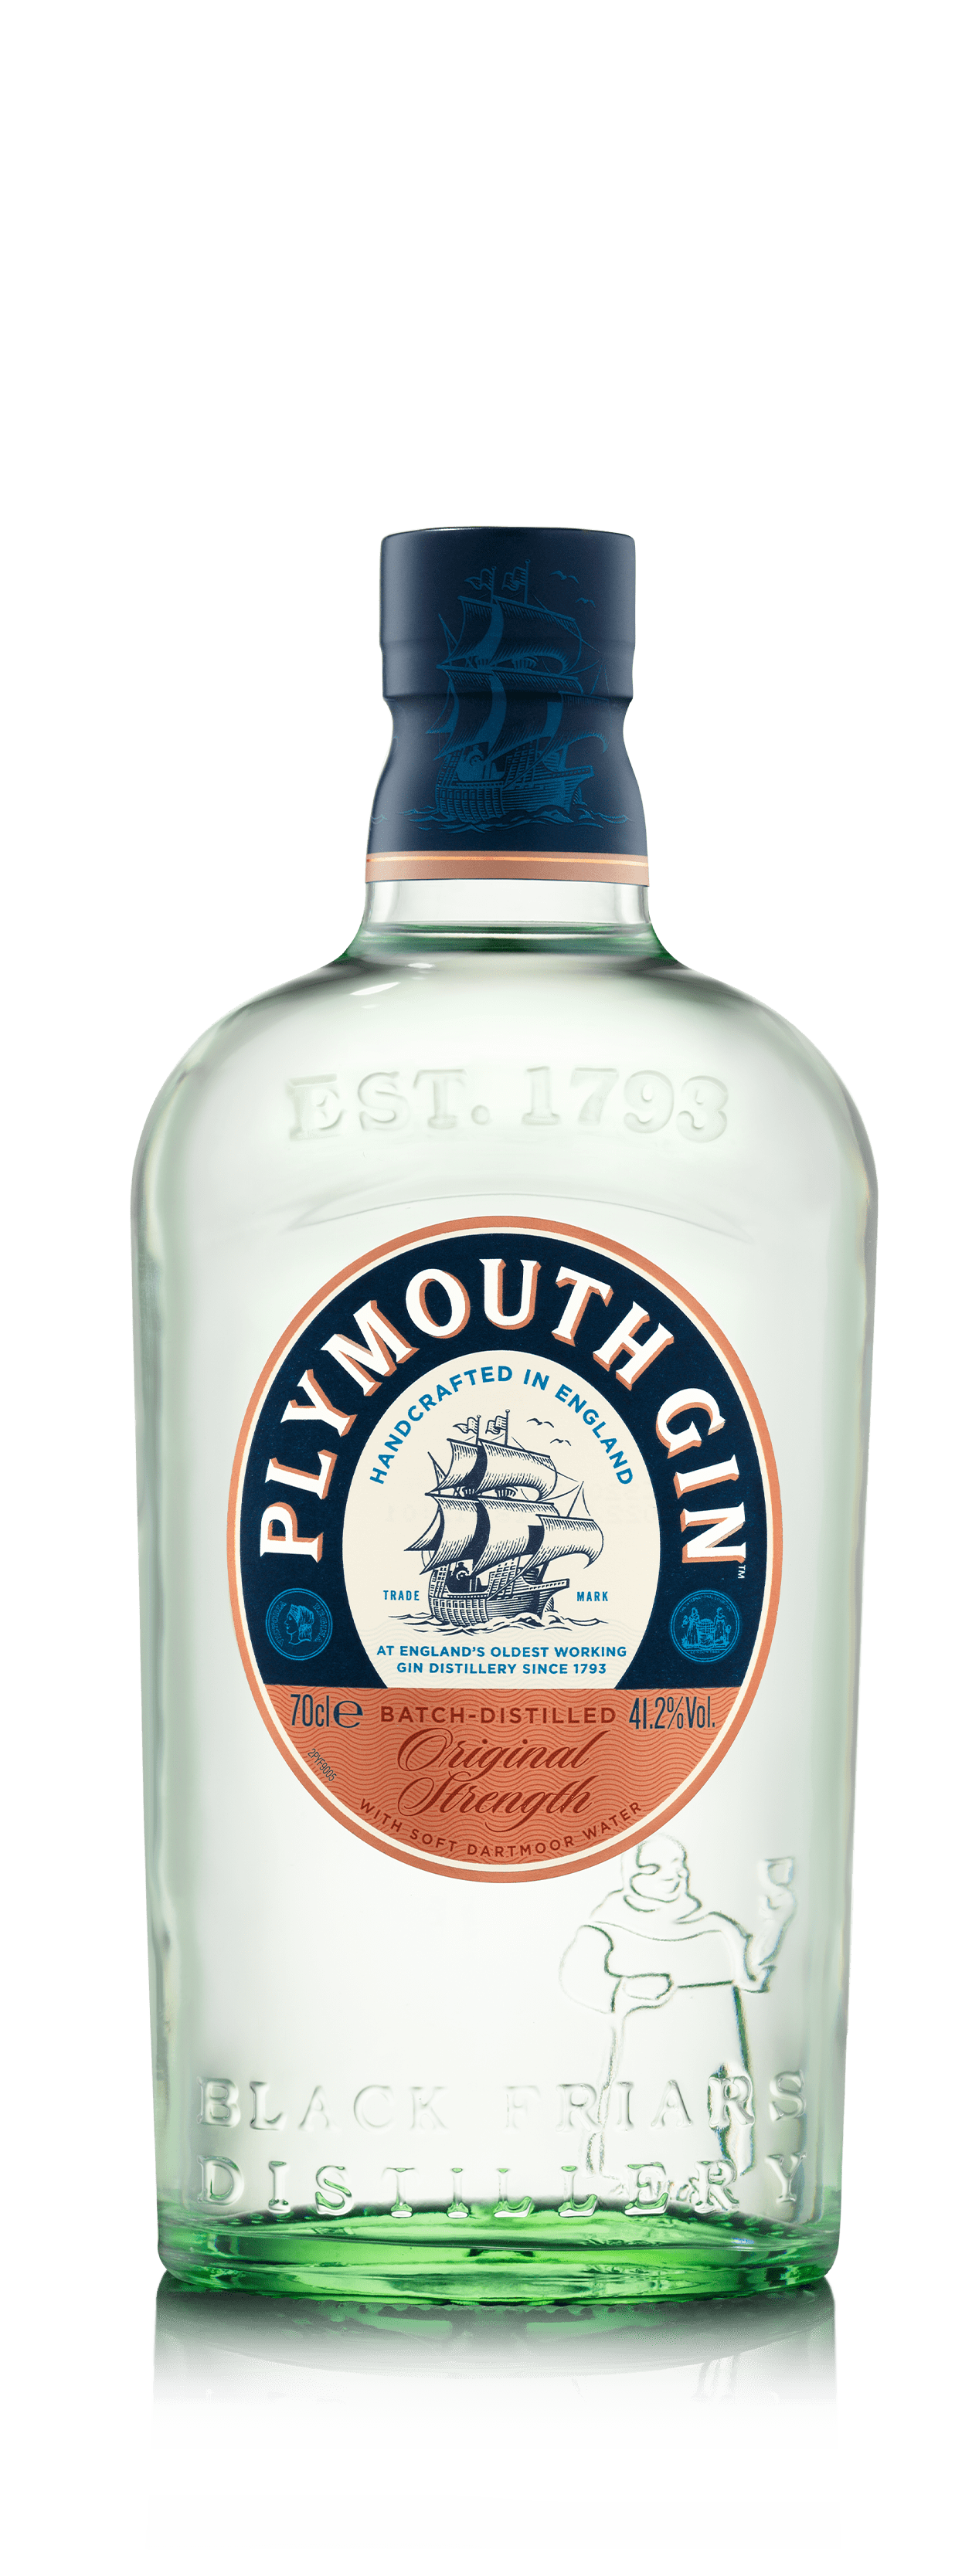 Plymouth Gin Original